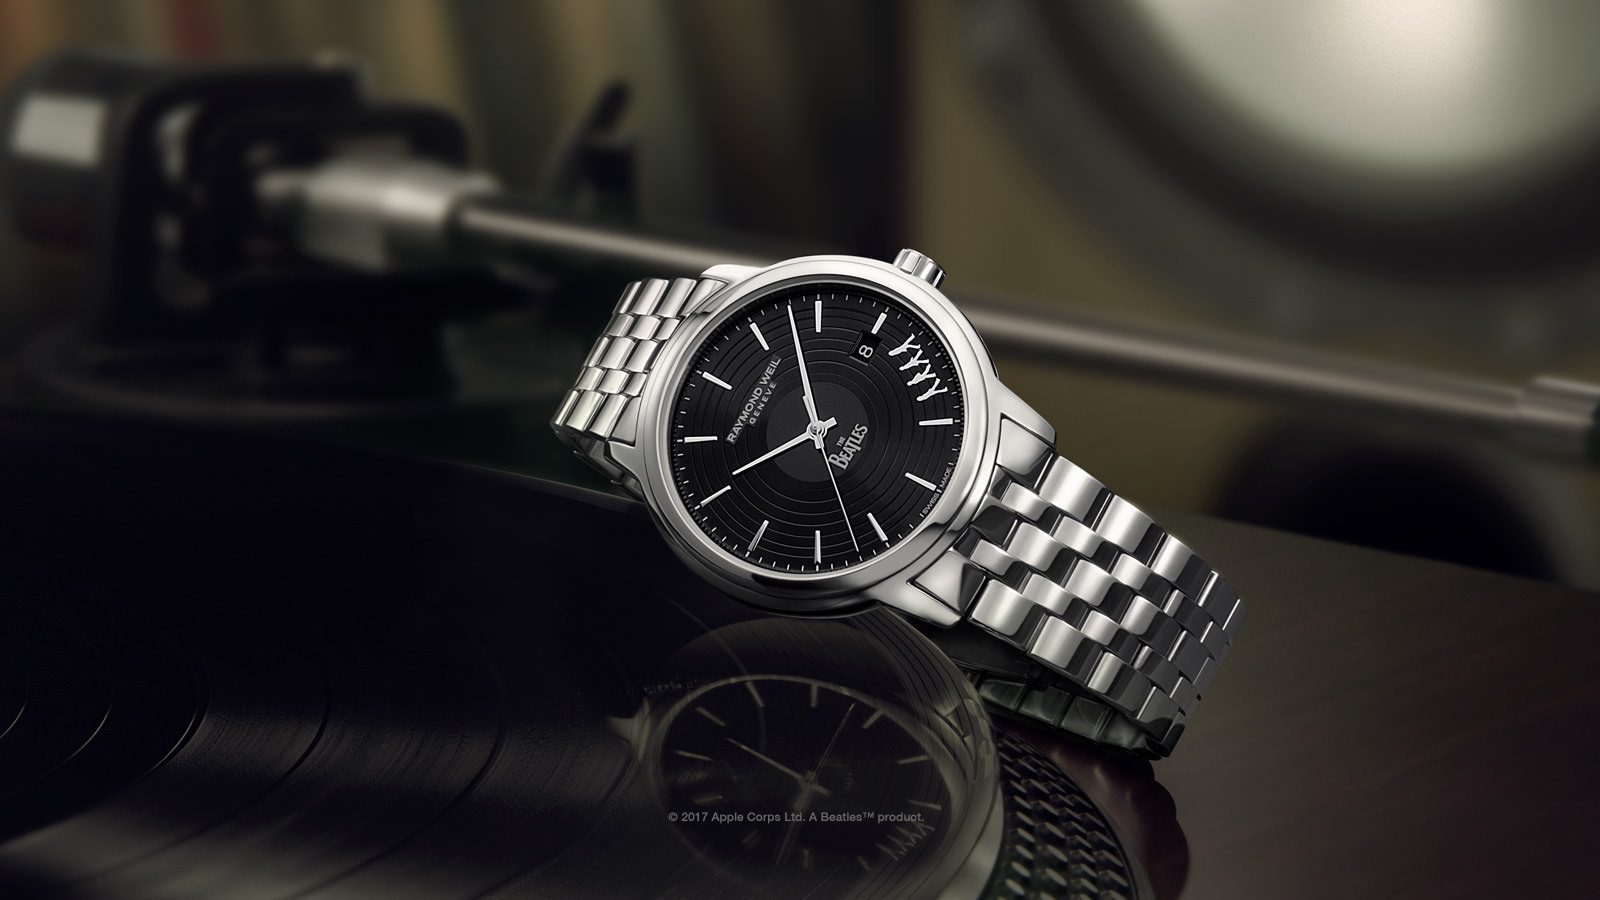 Replikas Chopard Watches